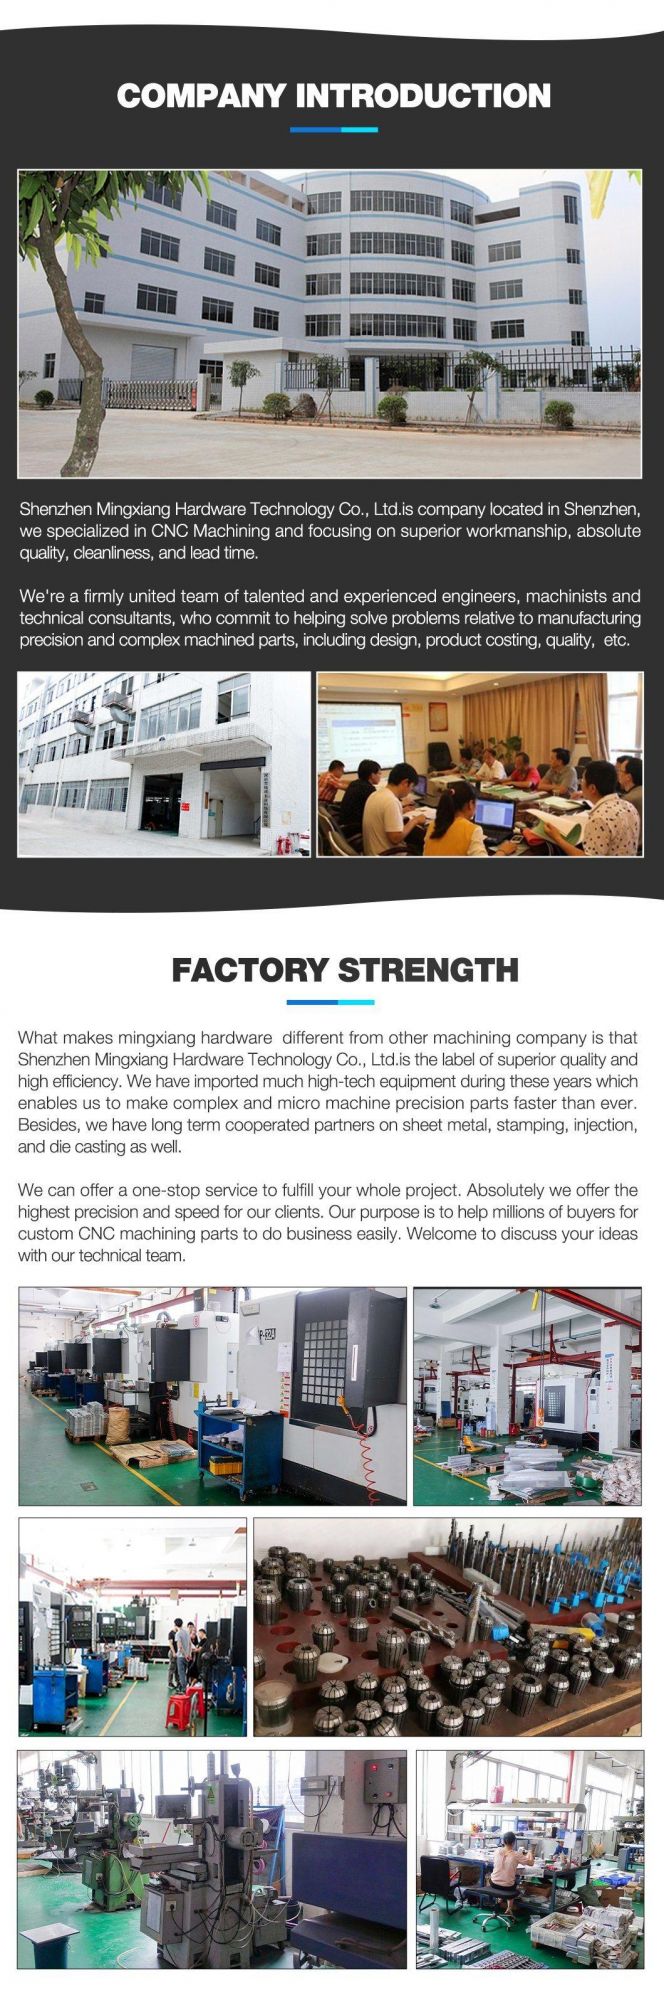 Shenzhen Manufacturer CNC Brass Parts, China Precision Manufacturing CNC Machining of Brass Parts